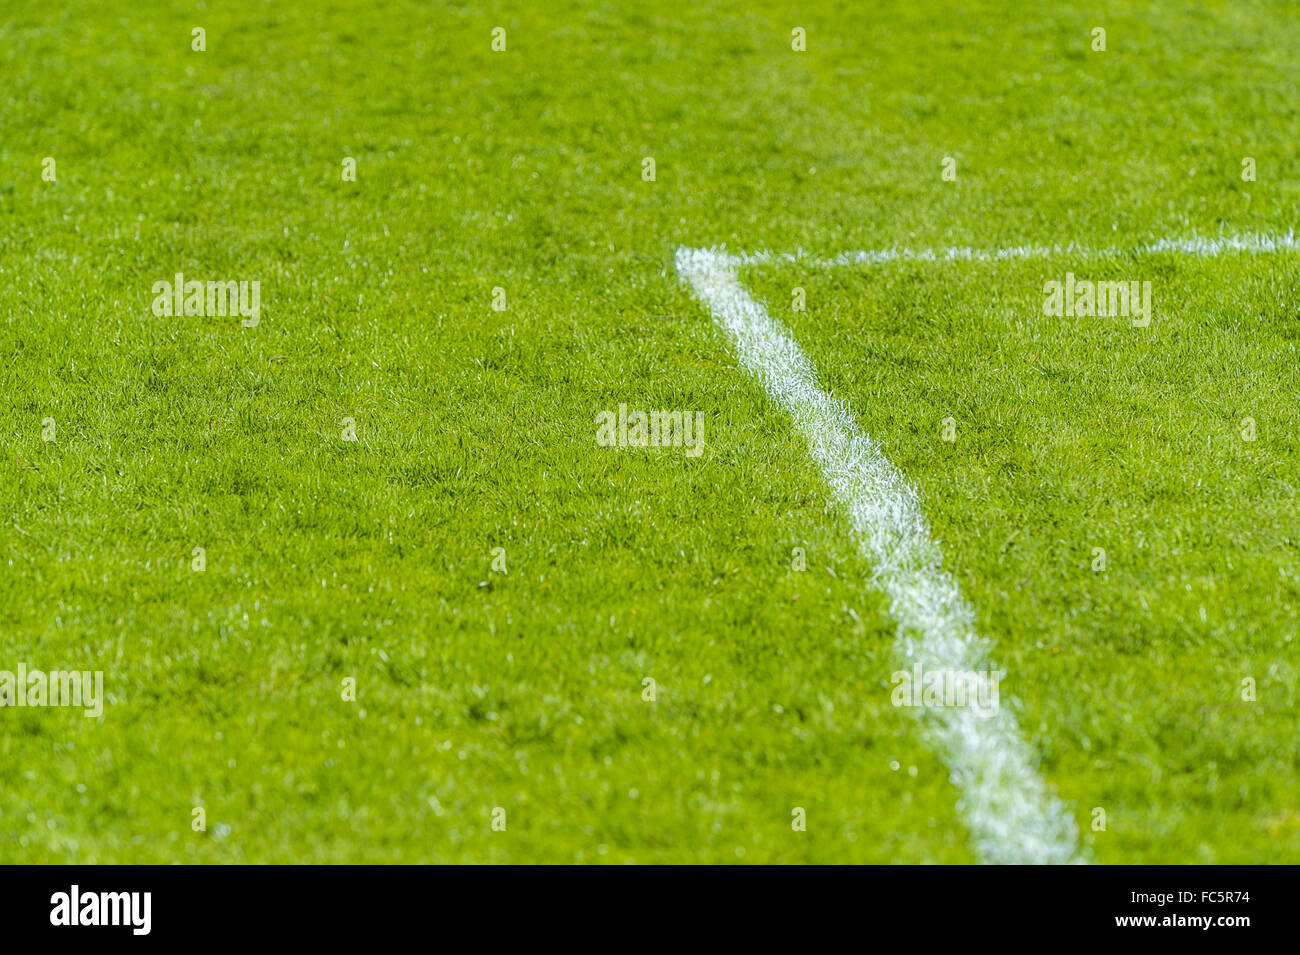 Football field goal line Stock Photo